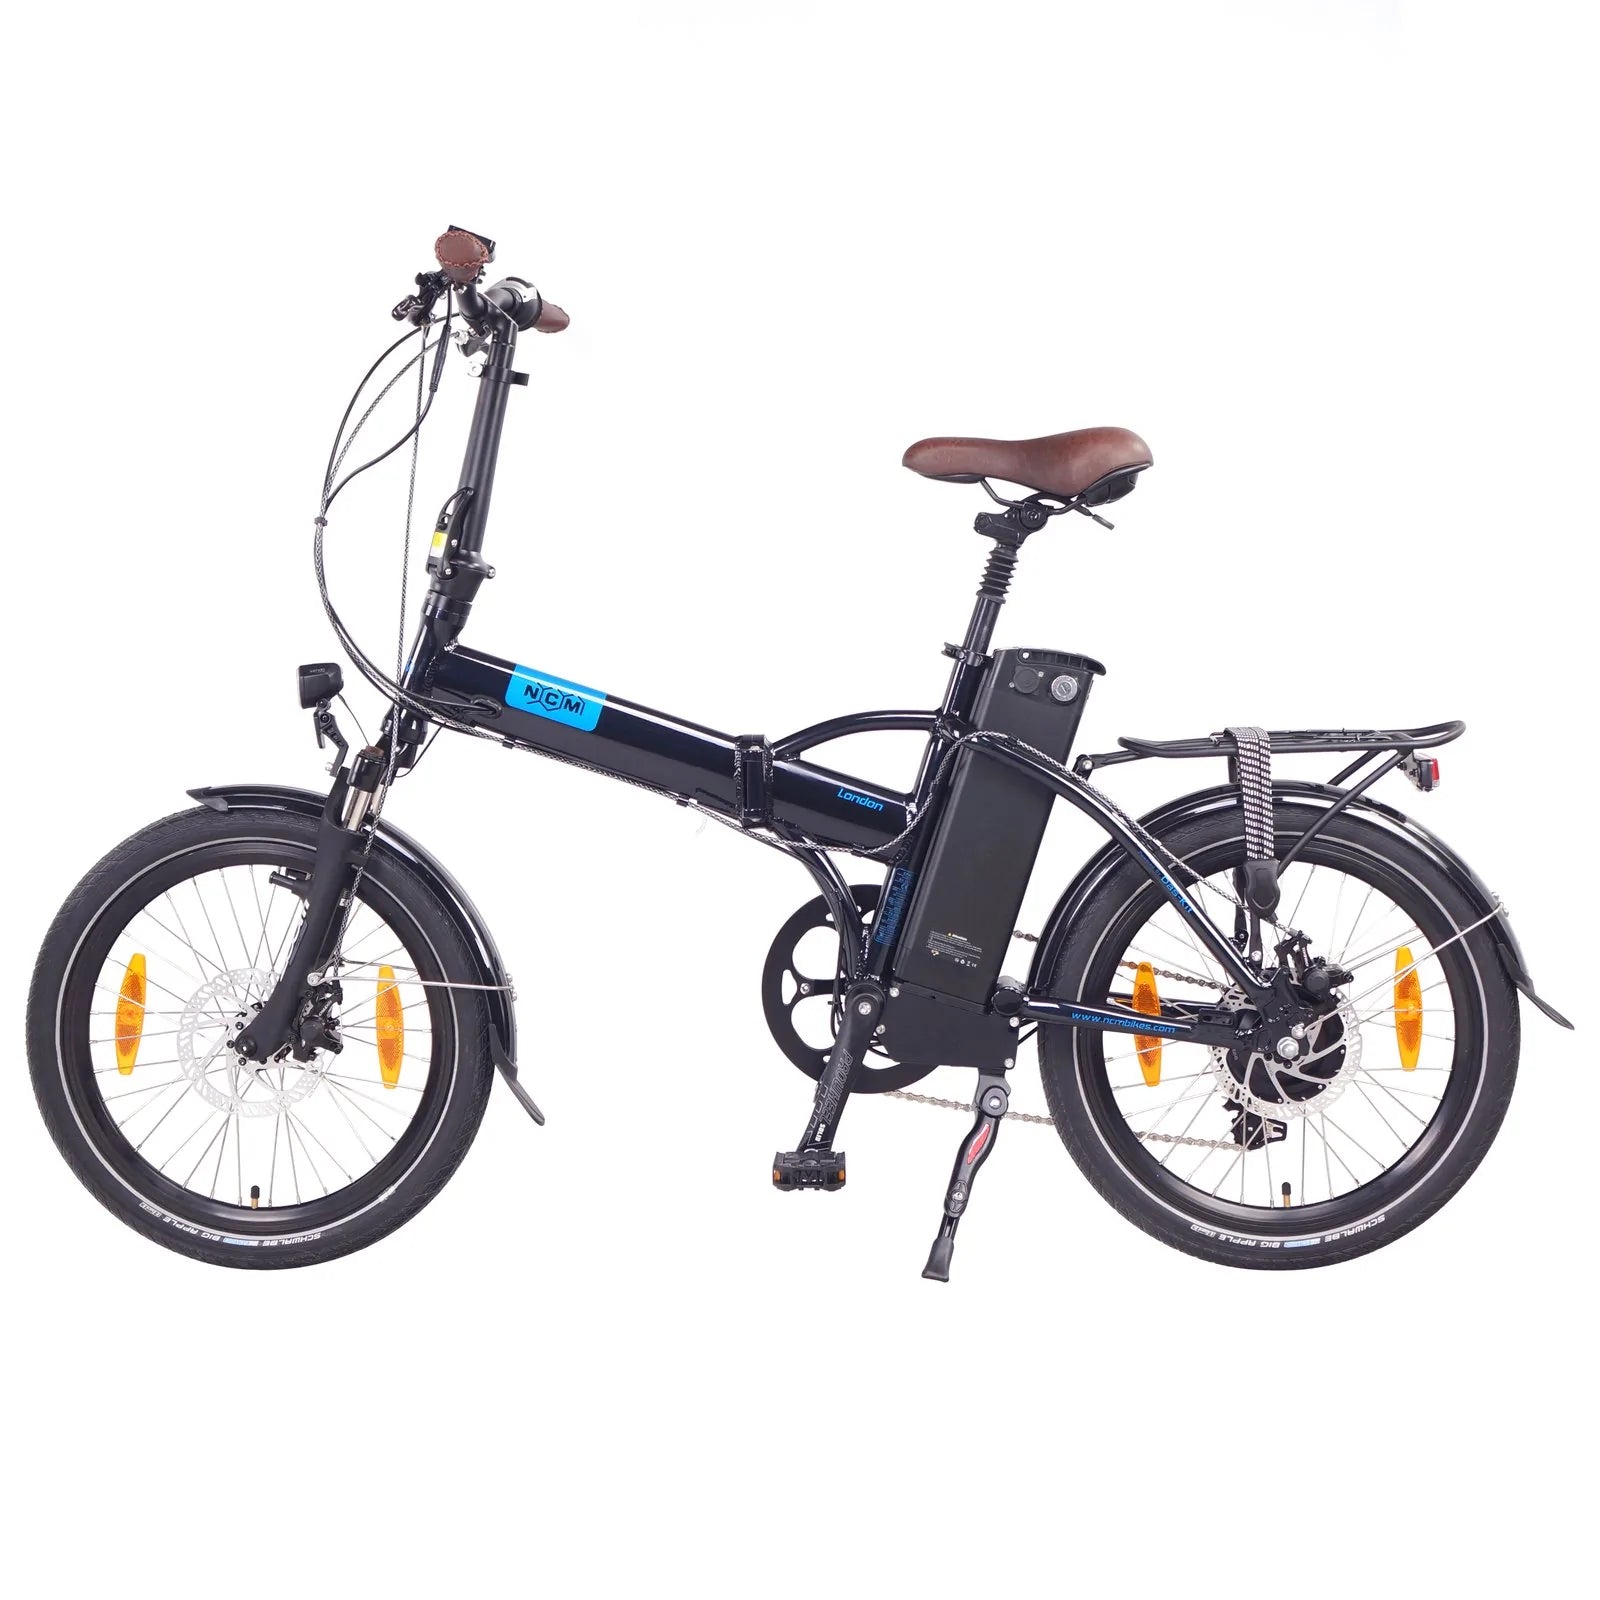 NCM London Folding E-Bike, 250W, 36V 15Ah 540Wh Battery, Size 20 | Leon Cycle Ebikes